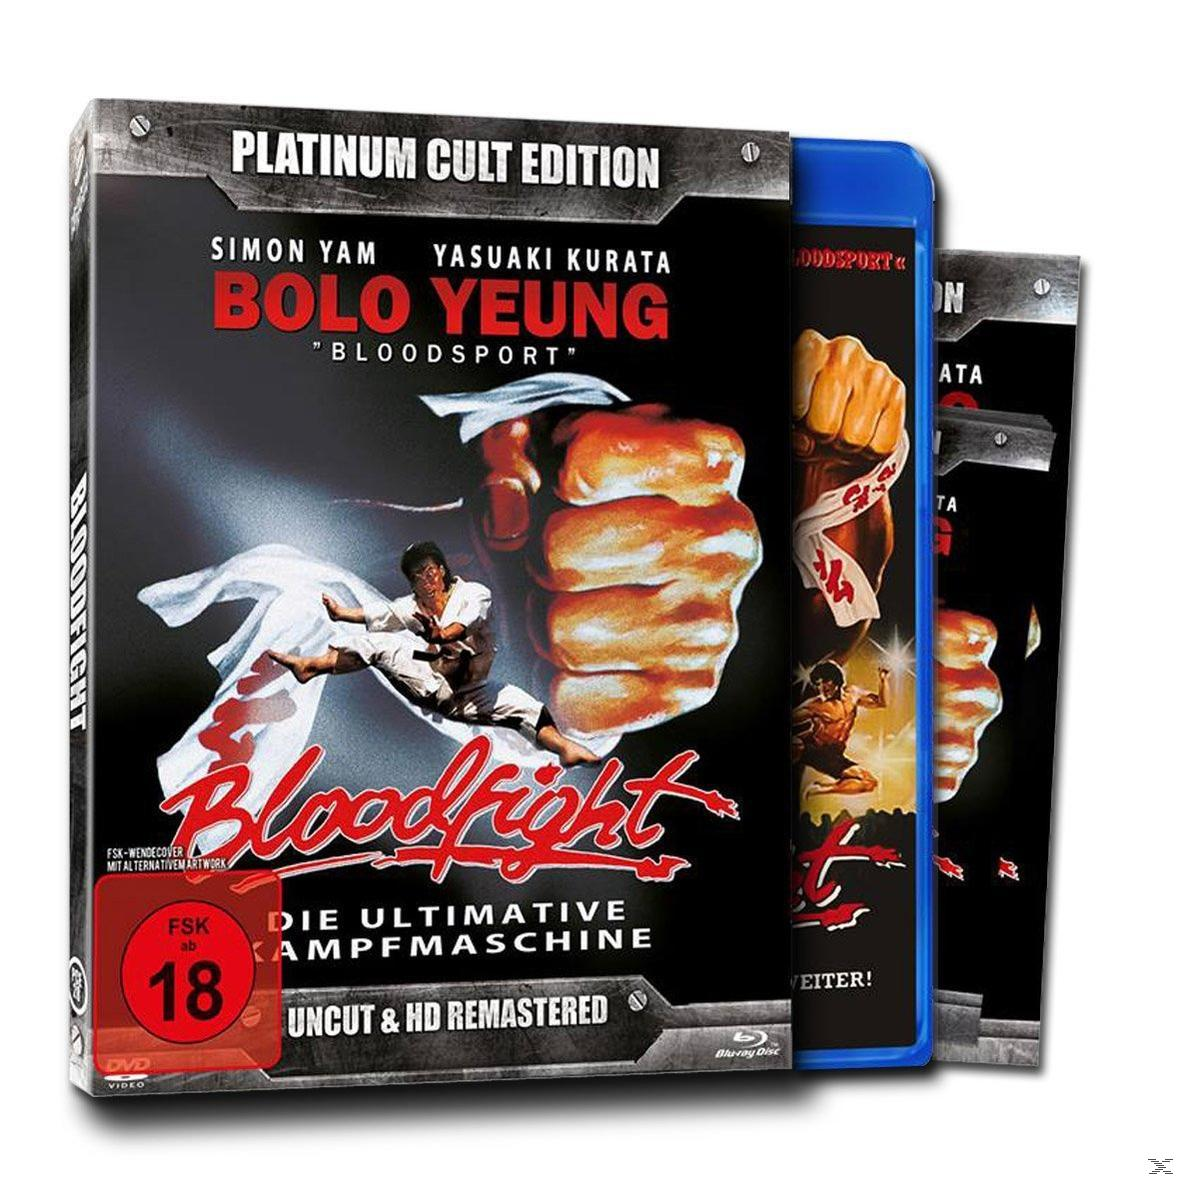 DVD Bloodfight Blu-ray +